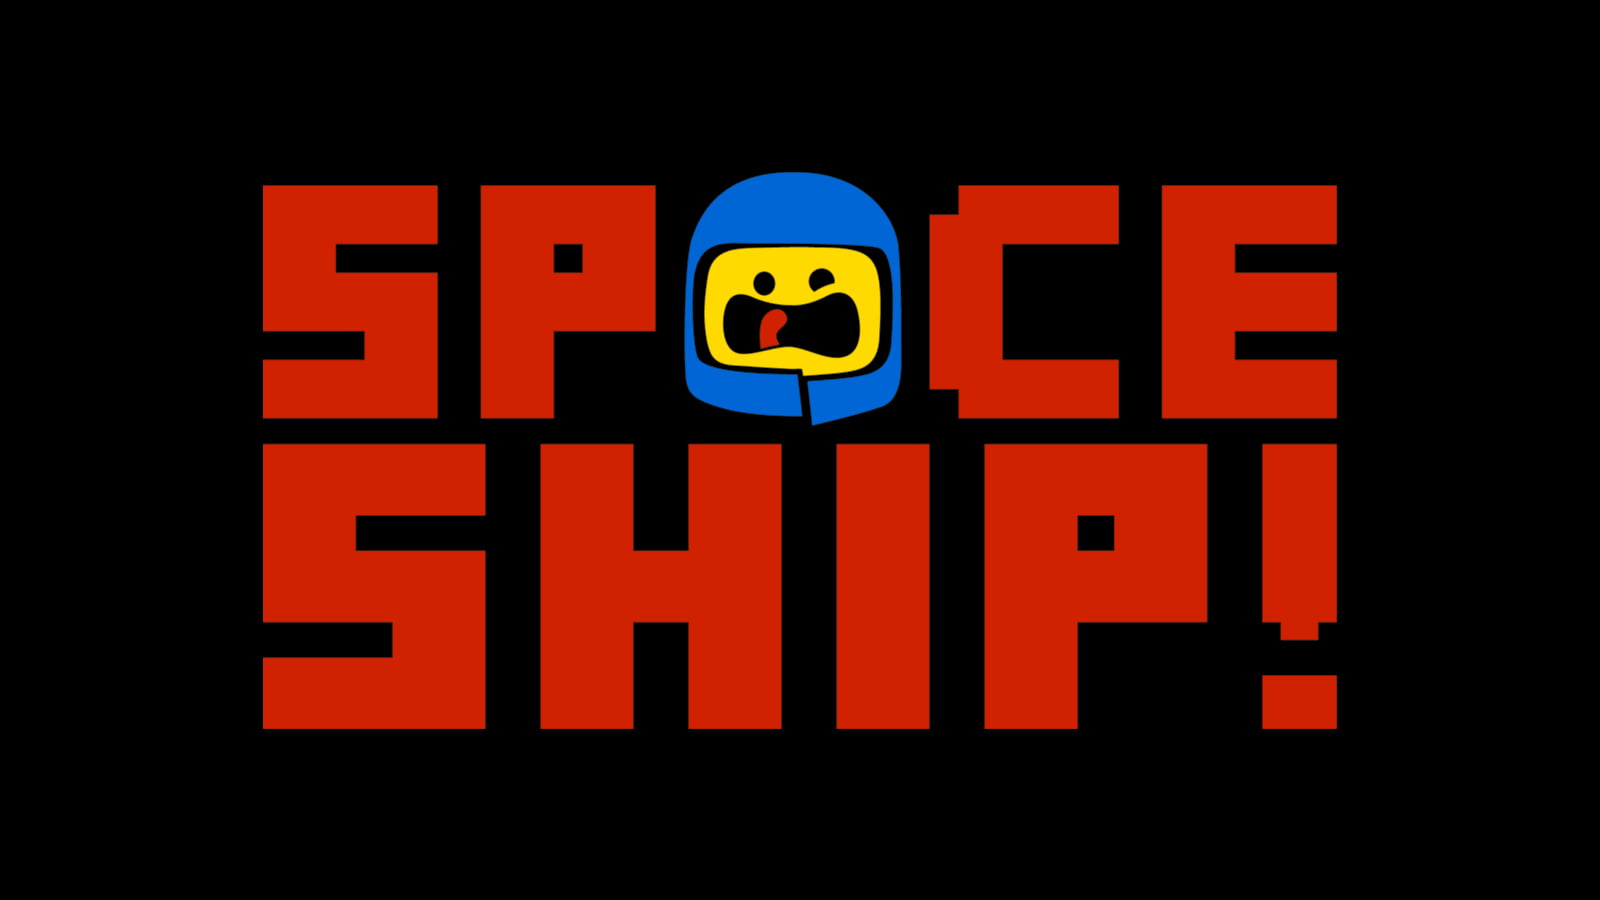 Space Ship! logo, The Lego Movie